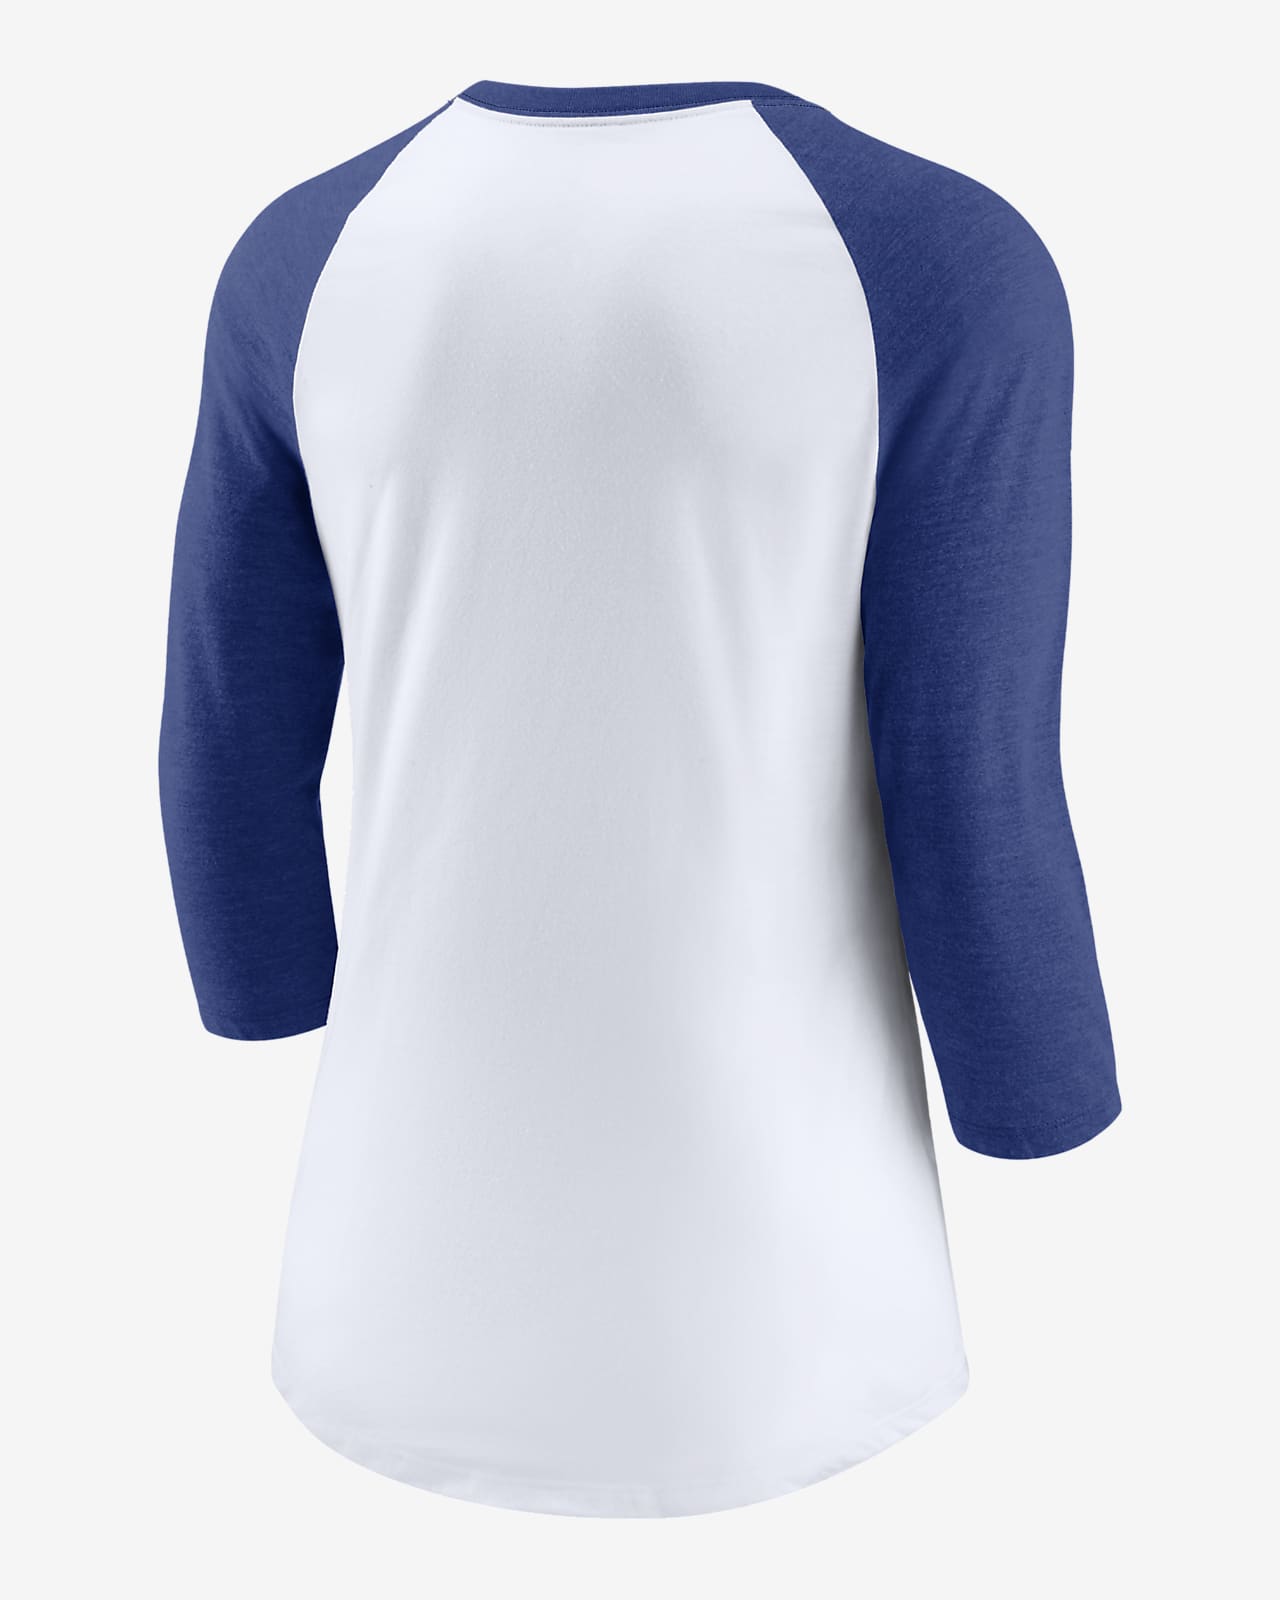 Nike Next Up (MLB Kansas City Royals) Women's 3/4-Sleeve Top